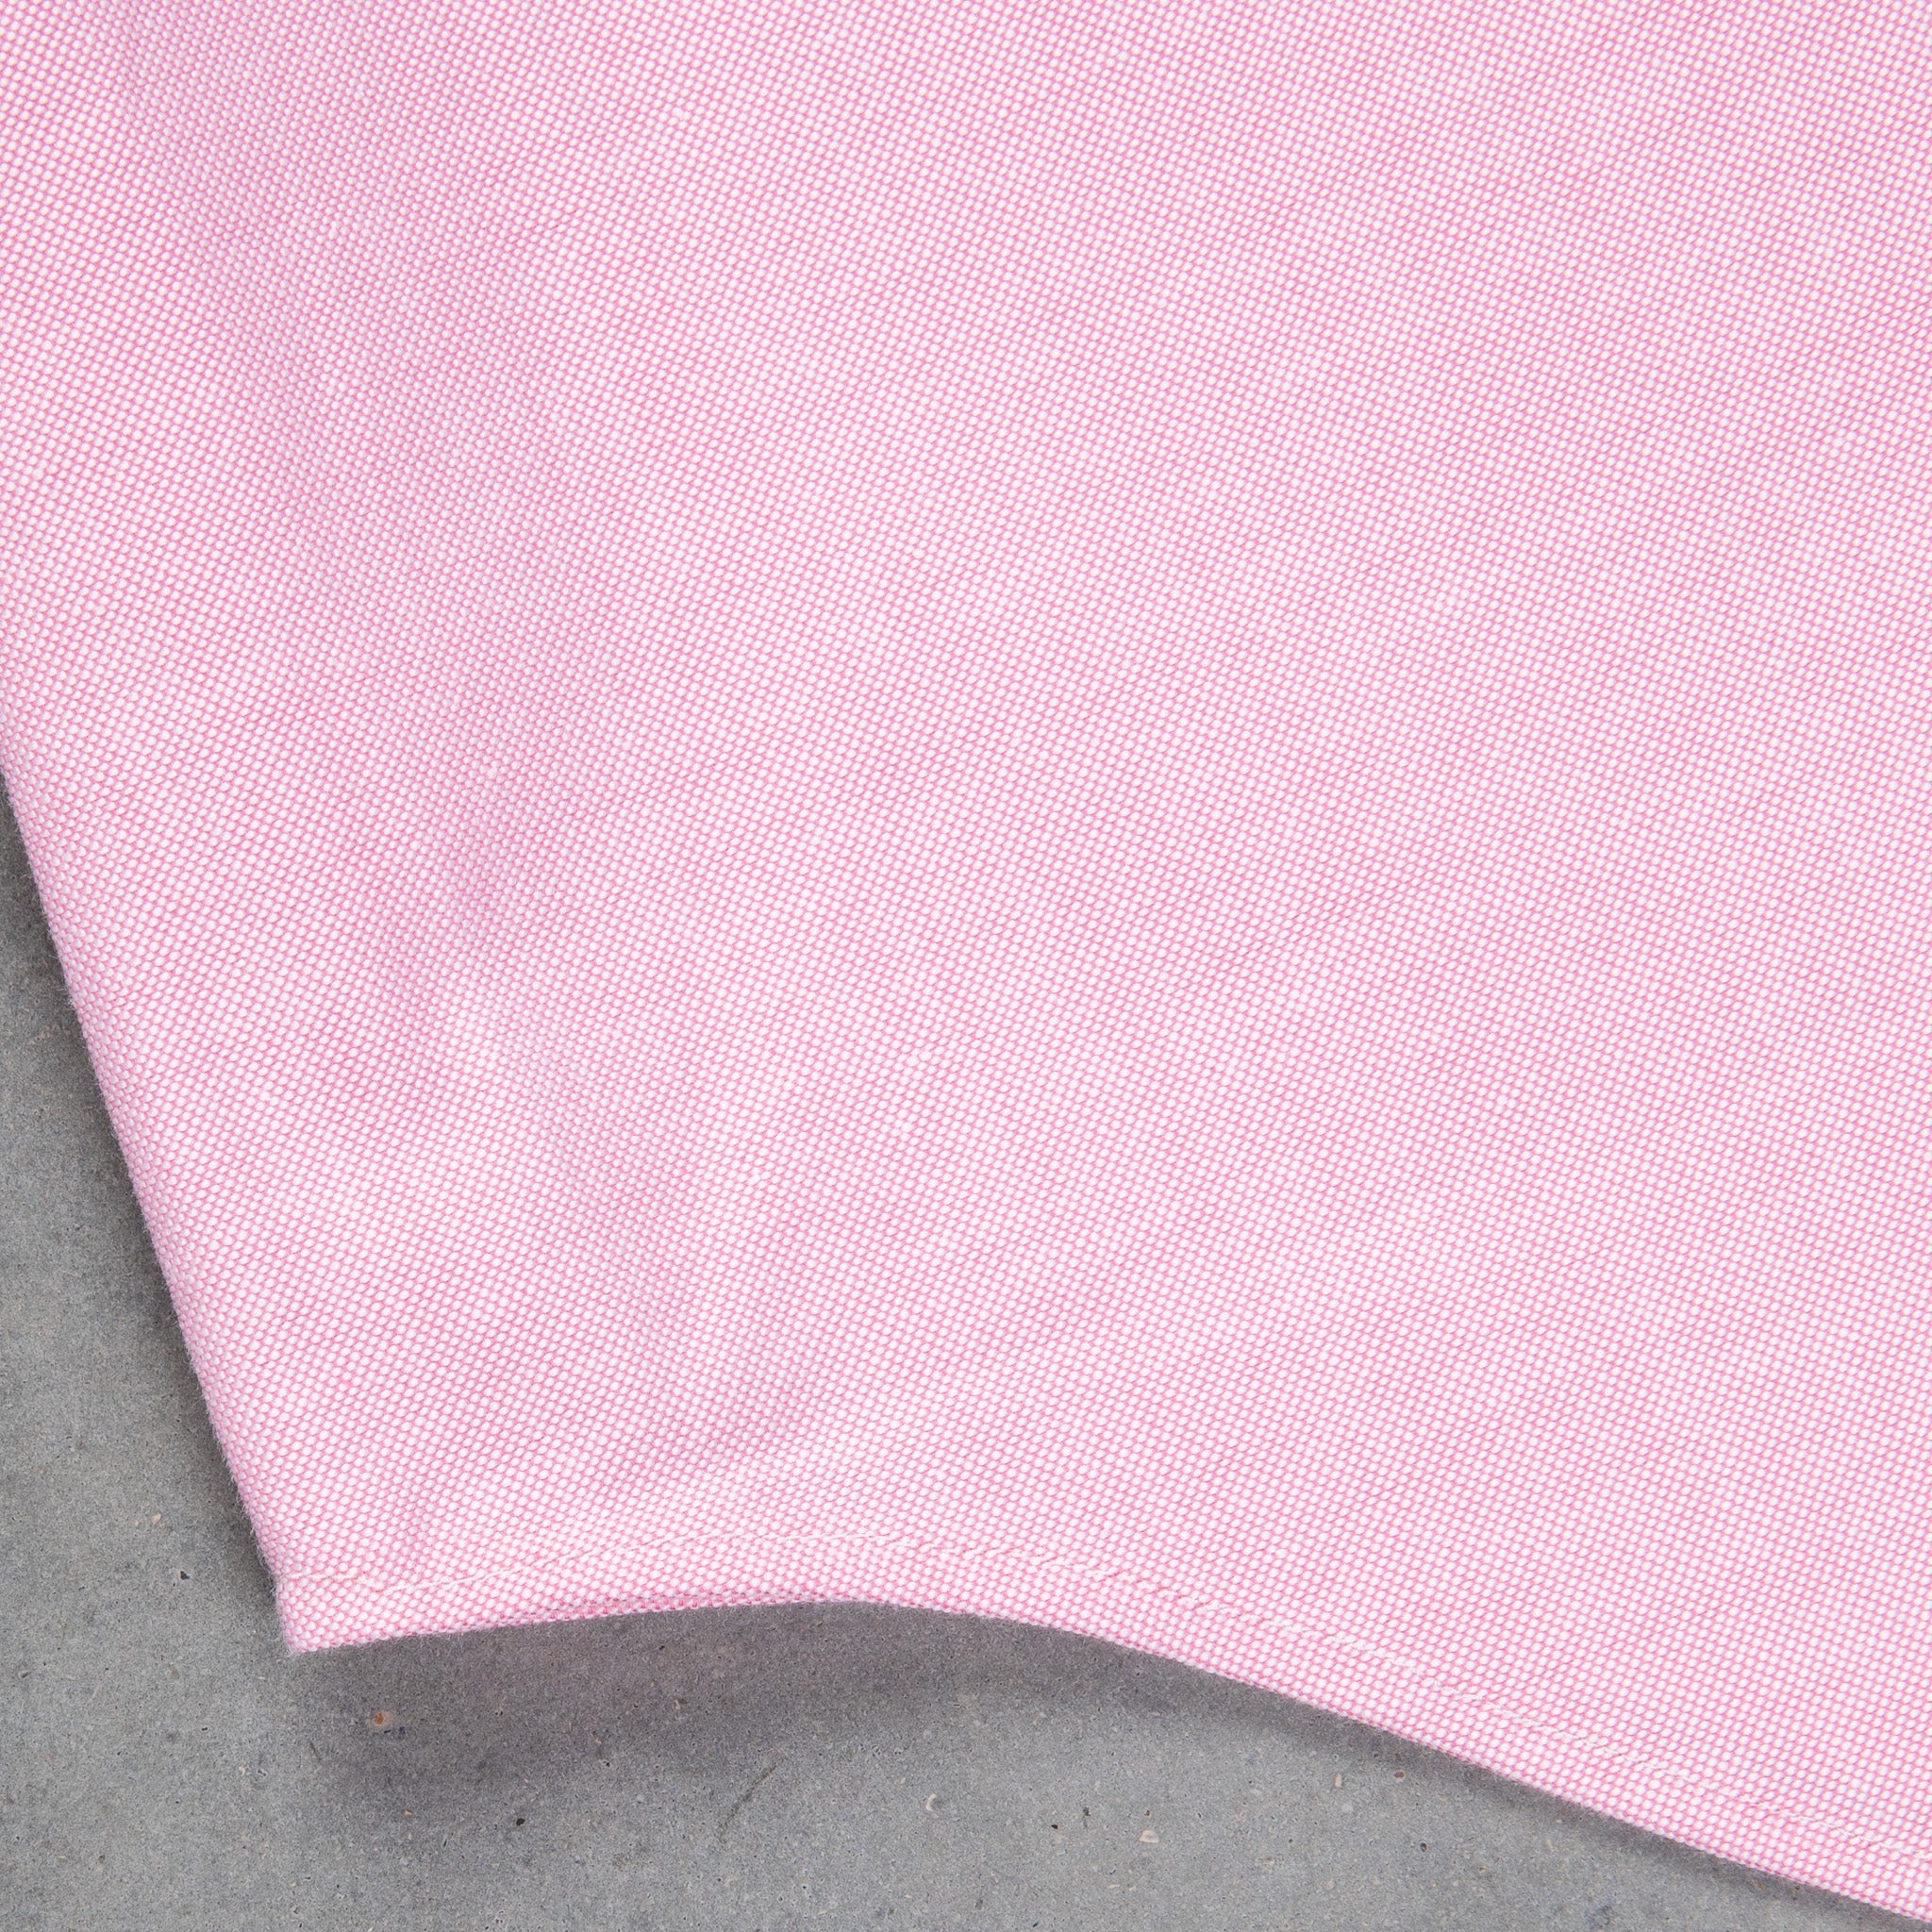 Far East Manufacturing Oxford Button-down Shirt Pink